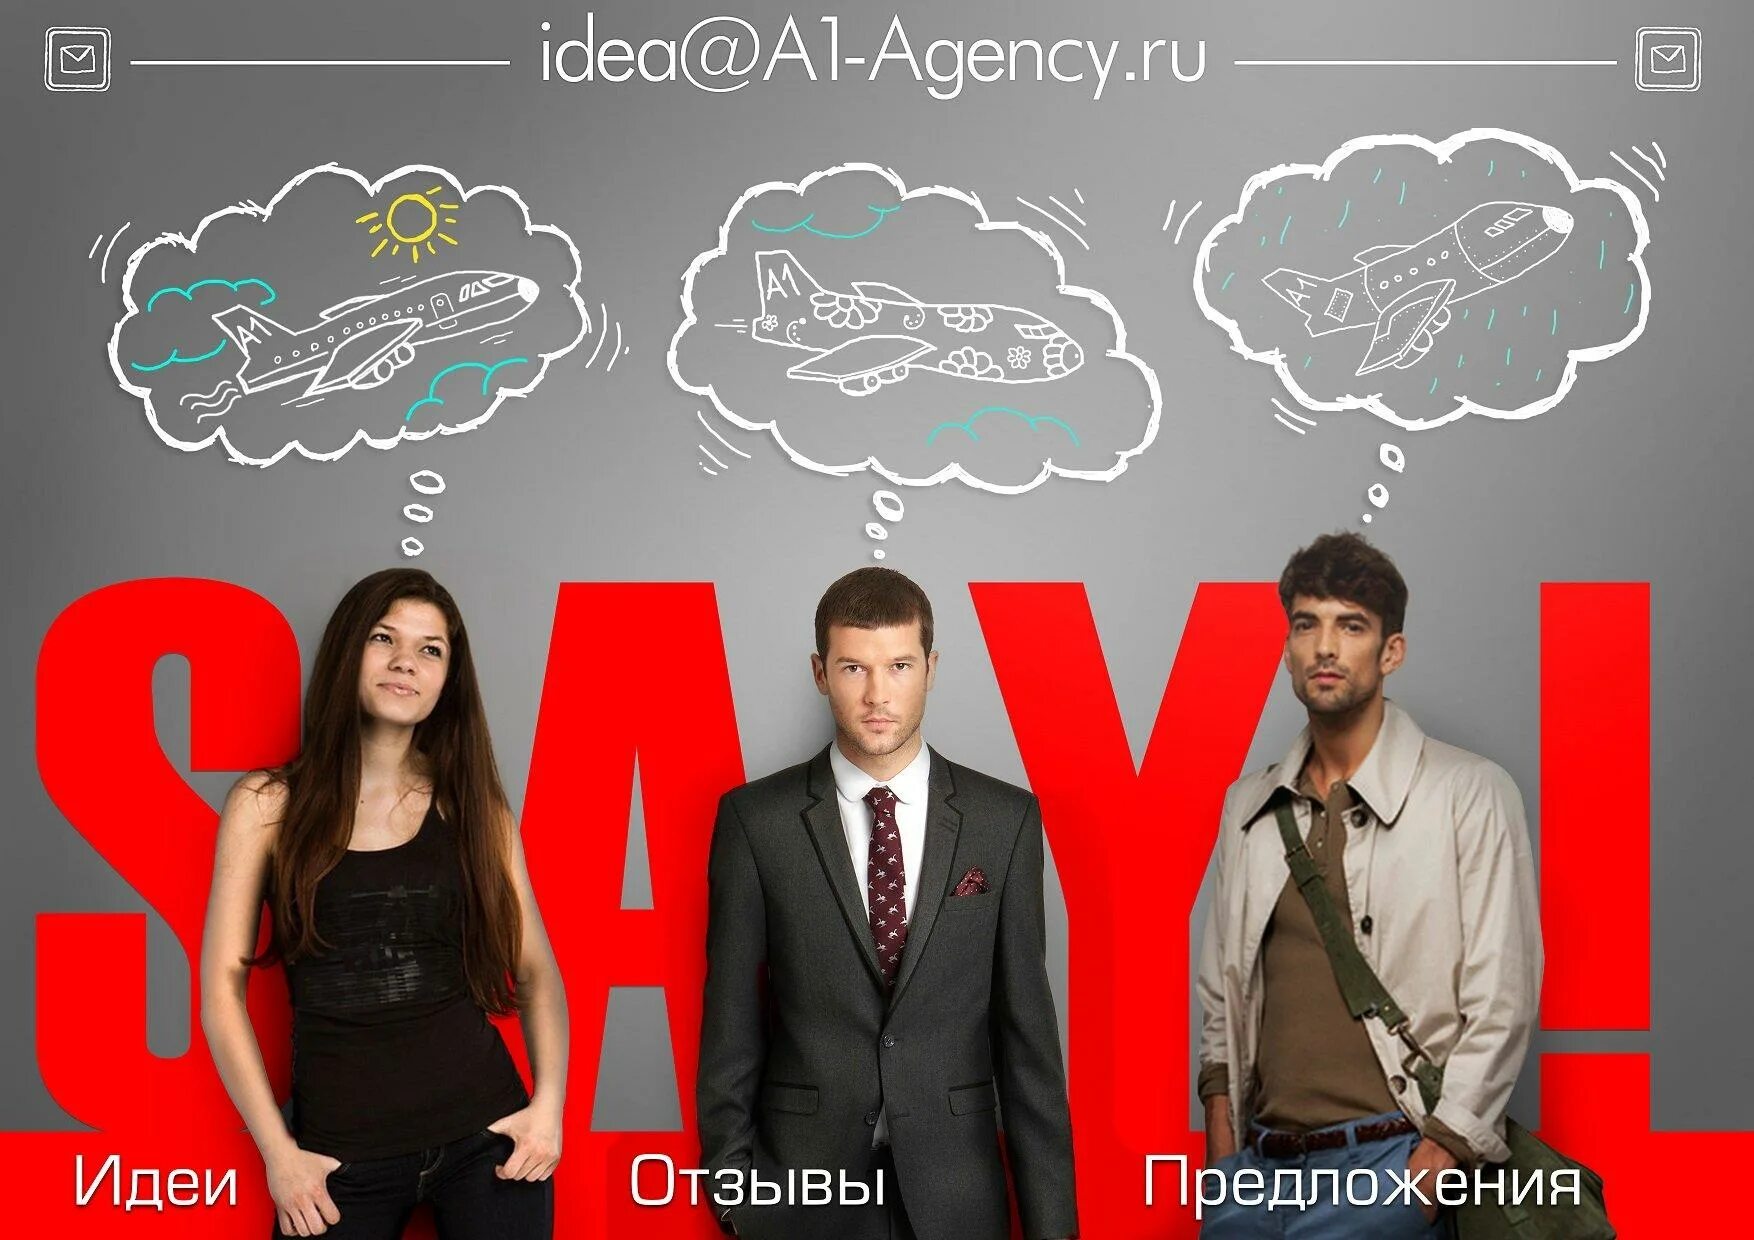 Agency me. БТЛ агентство. А1 агентство. Специалист в рекламных или PR-агентствах. BTL агентство Москва.